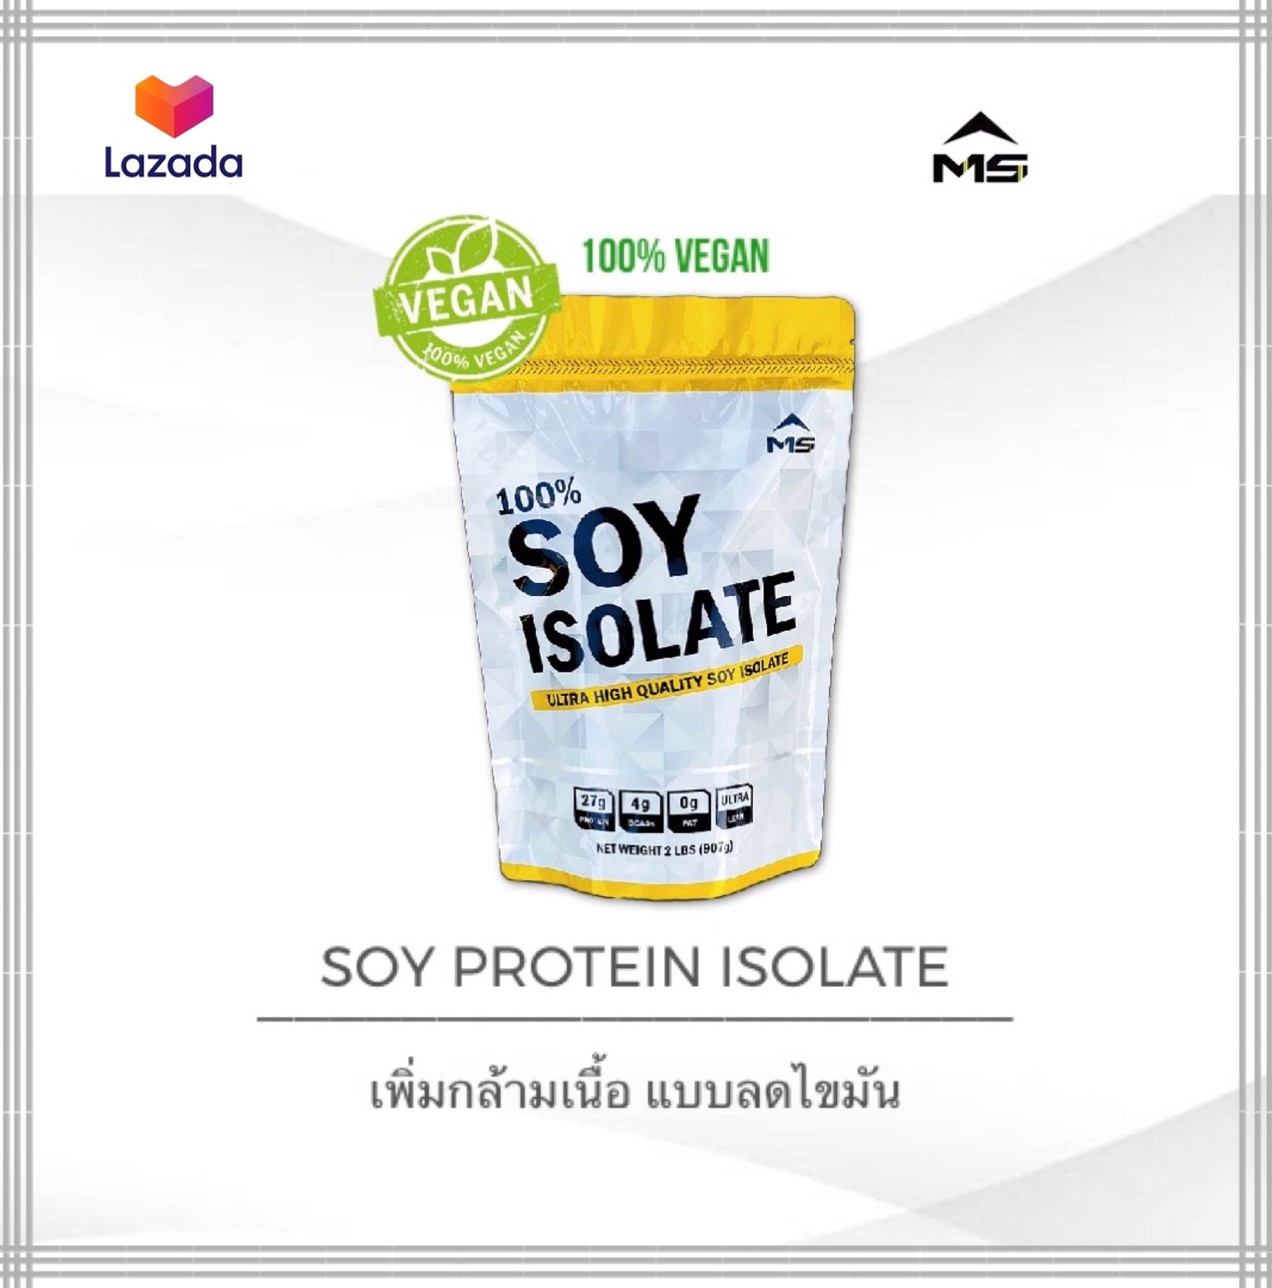 MS SOY PROTEIN ISOLATE เวย์โปรตีน ซอยโปรตีน โปรตีนถั่วเหลืองแท้ 100% เพิ่มกล้าม ลดไขมัน แพ้เวย์โปรตี